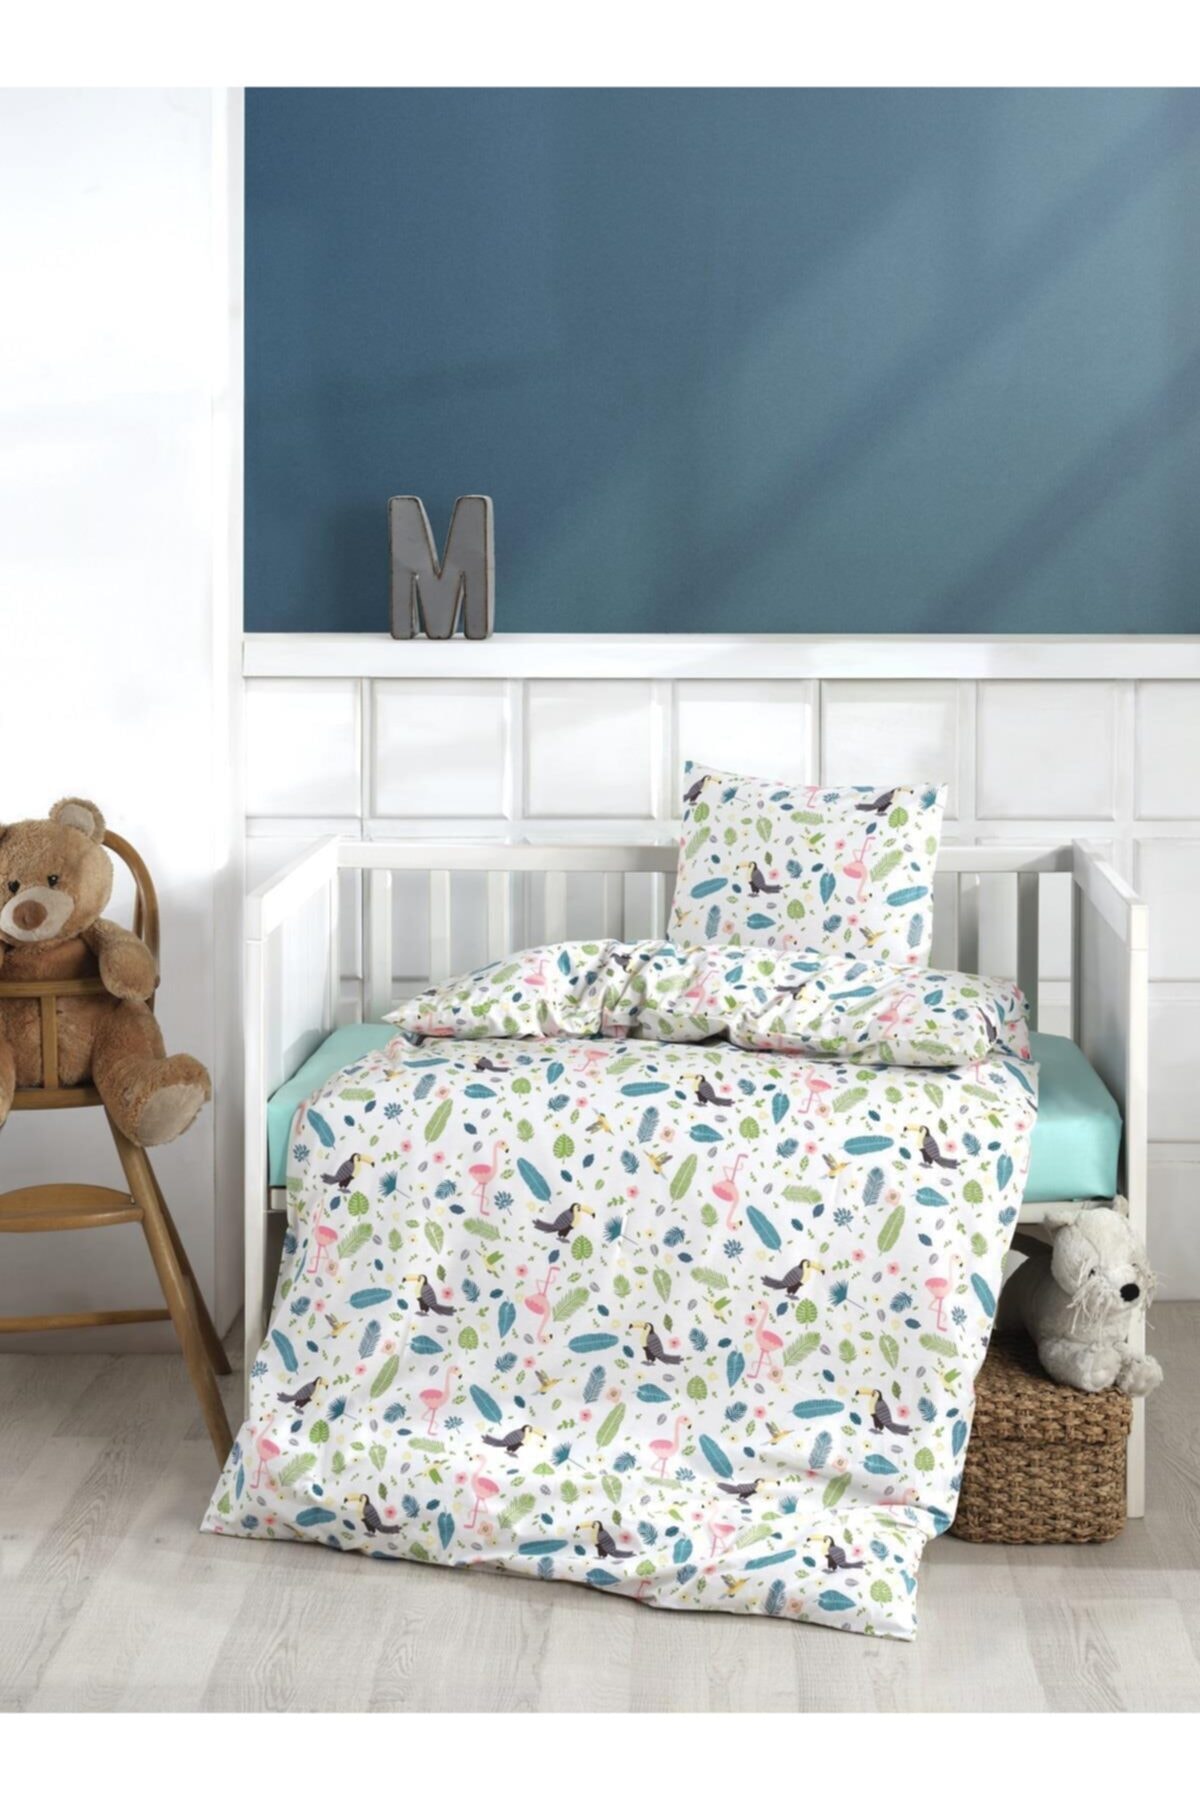 UniWhite Cotton Baby Duvet cover set Flamingo Pattern Ranforce baby children&s bed cover duvet cover kit carsap pillow